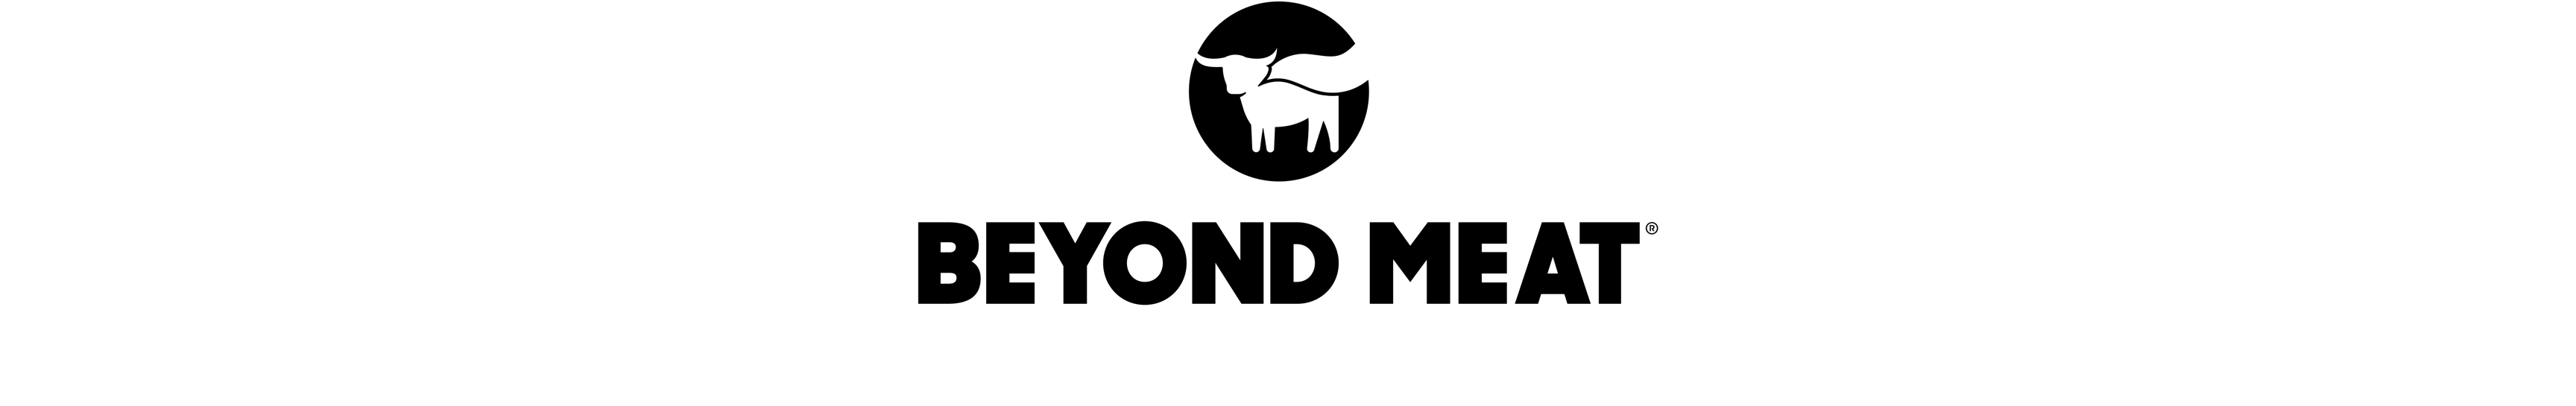 beyond-meat_CS-01.png